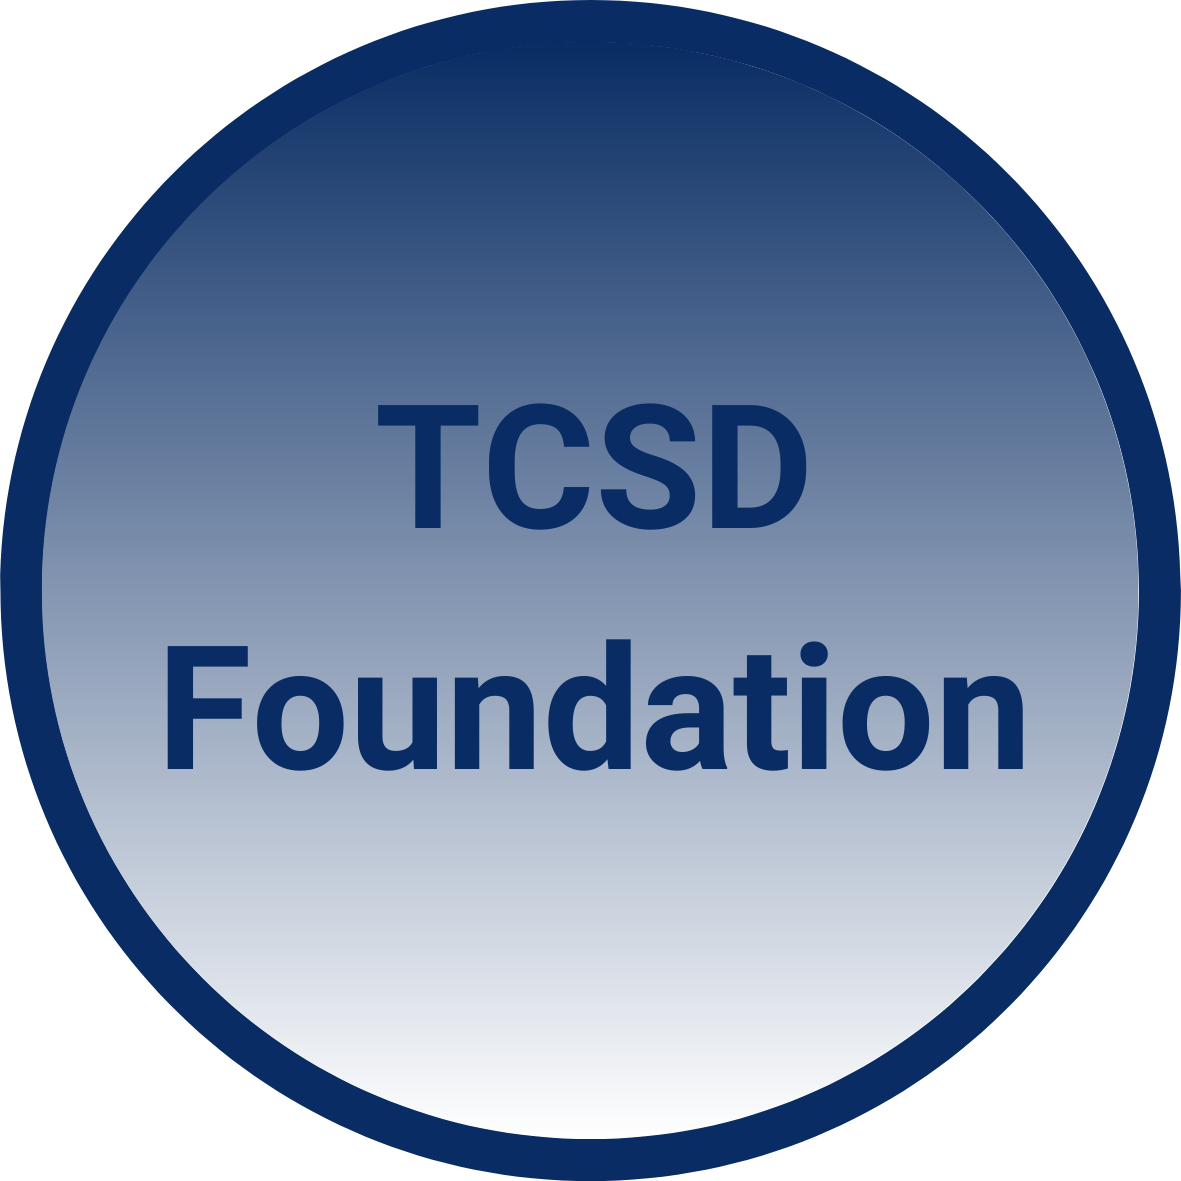 TCSD Foundation